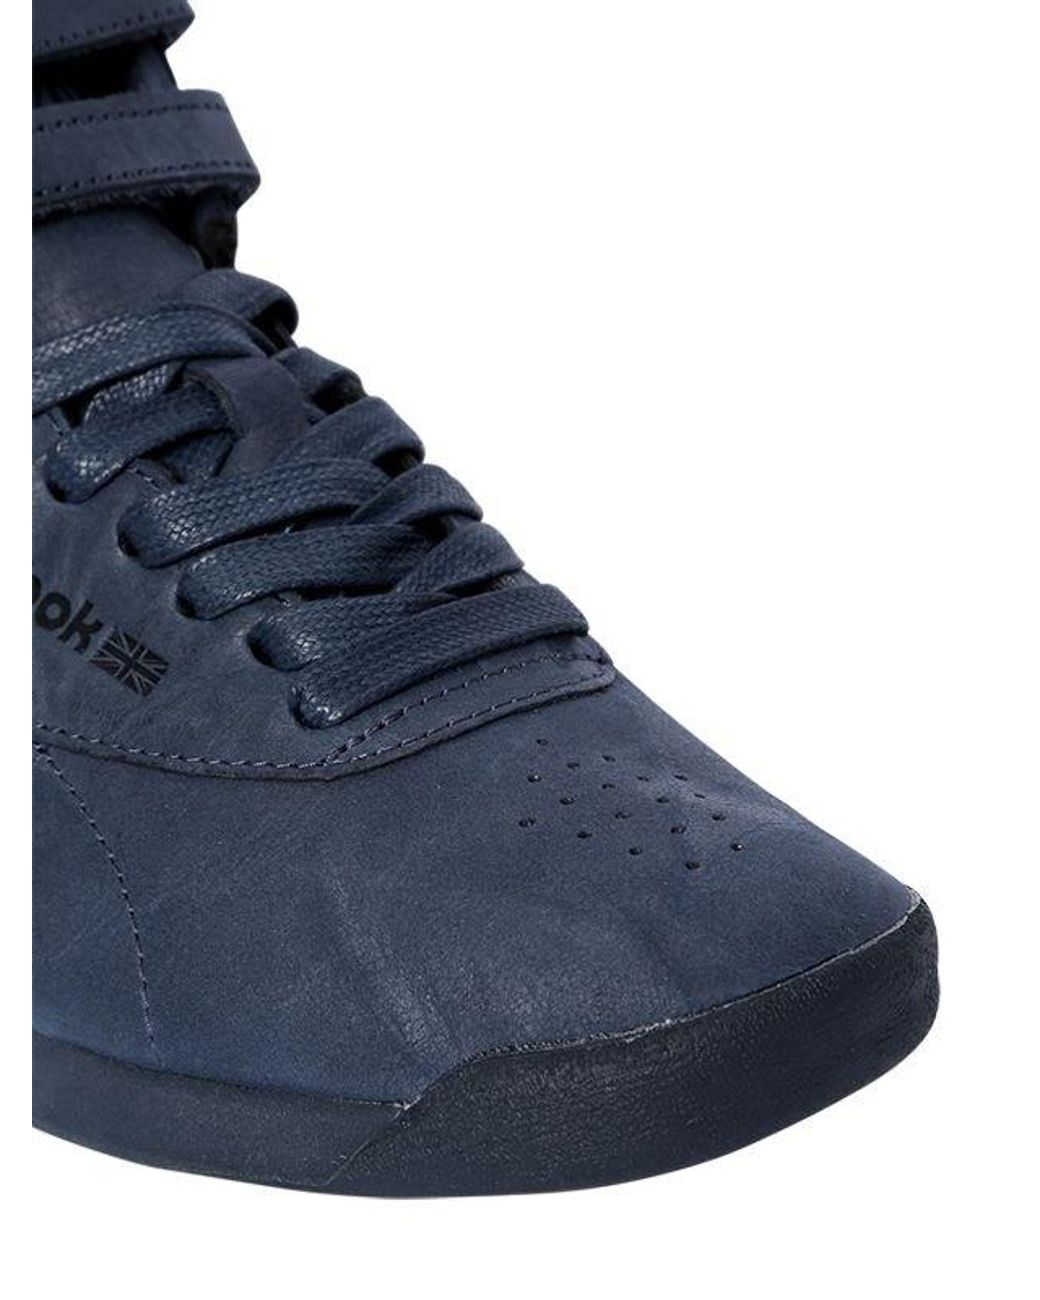 Reebok Freestyle Nubuck High Top Sneakers in Navy (Blue) | Lyst